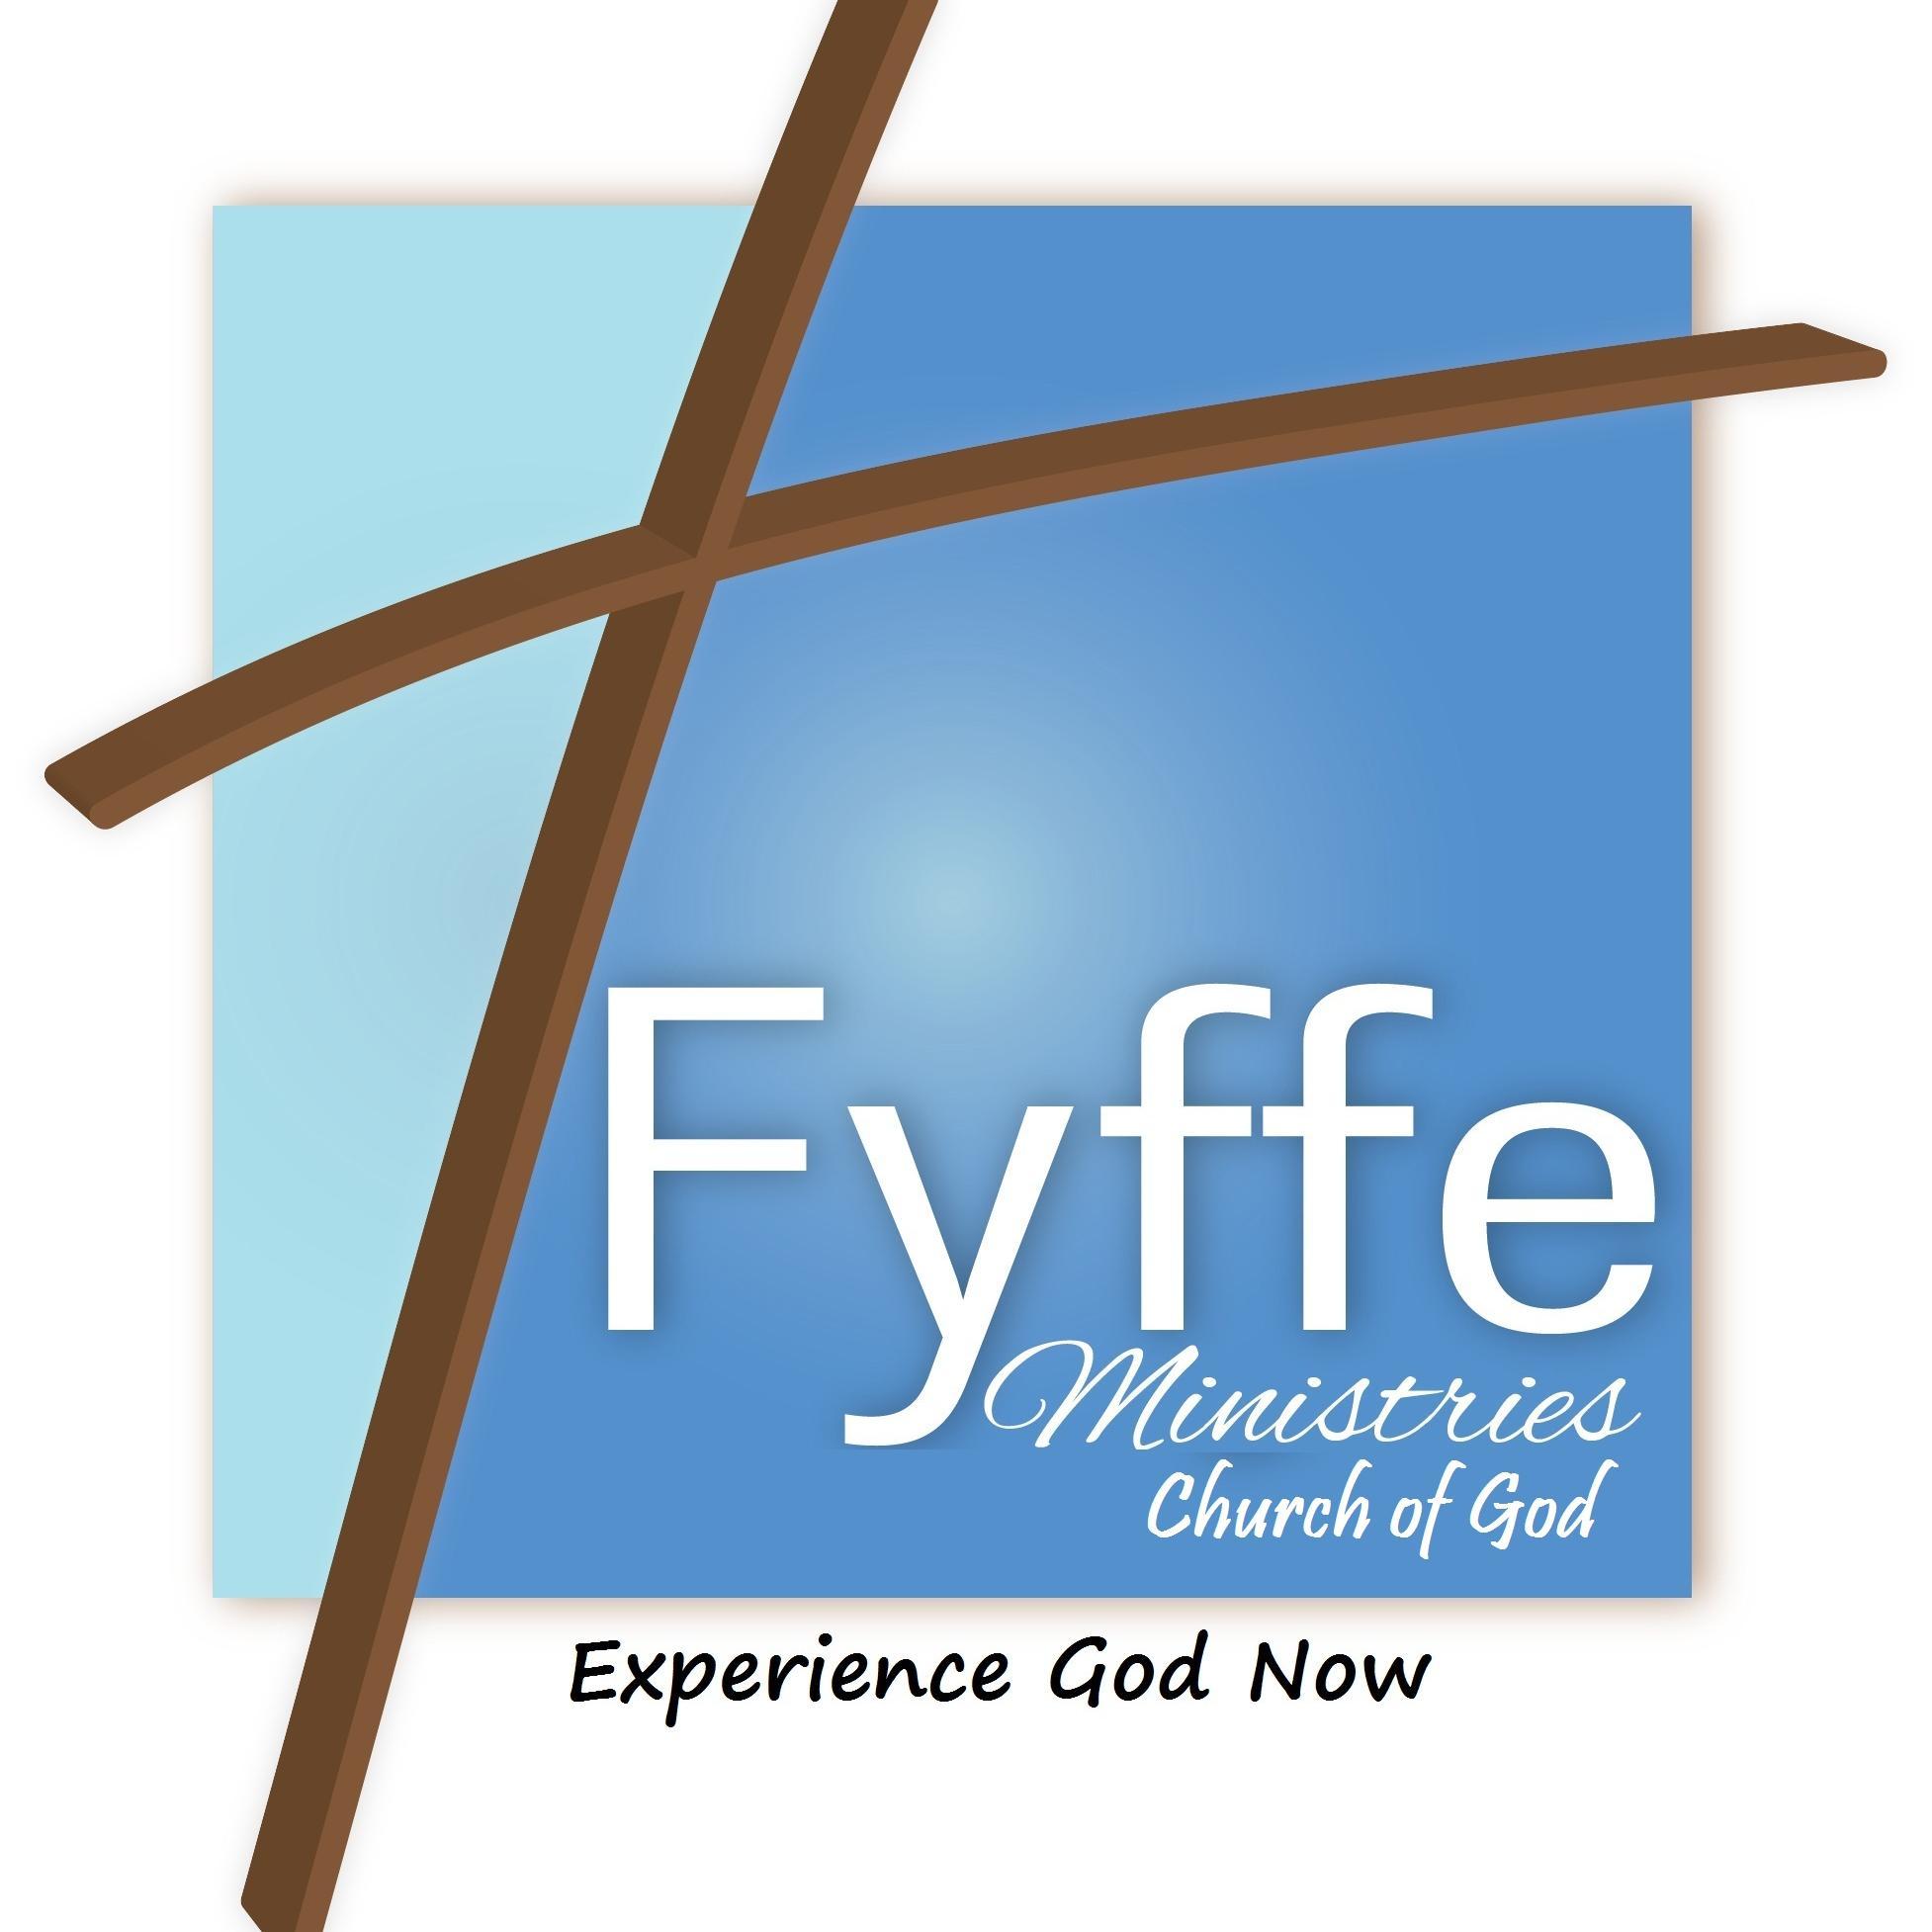 Fyffe Ministries